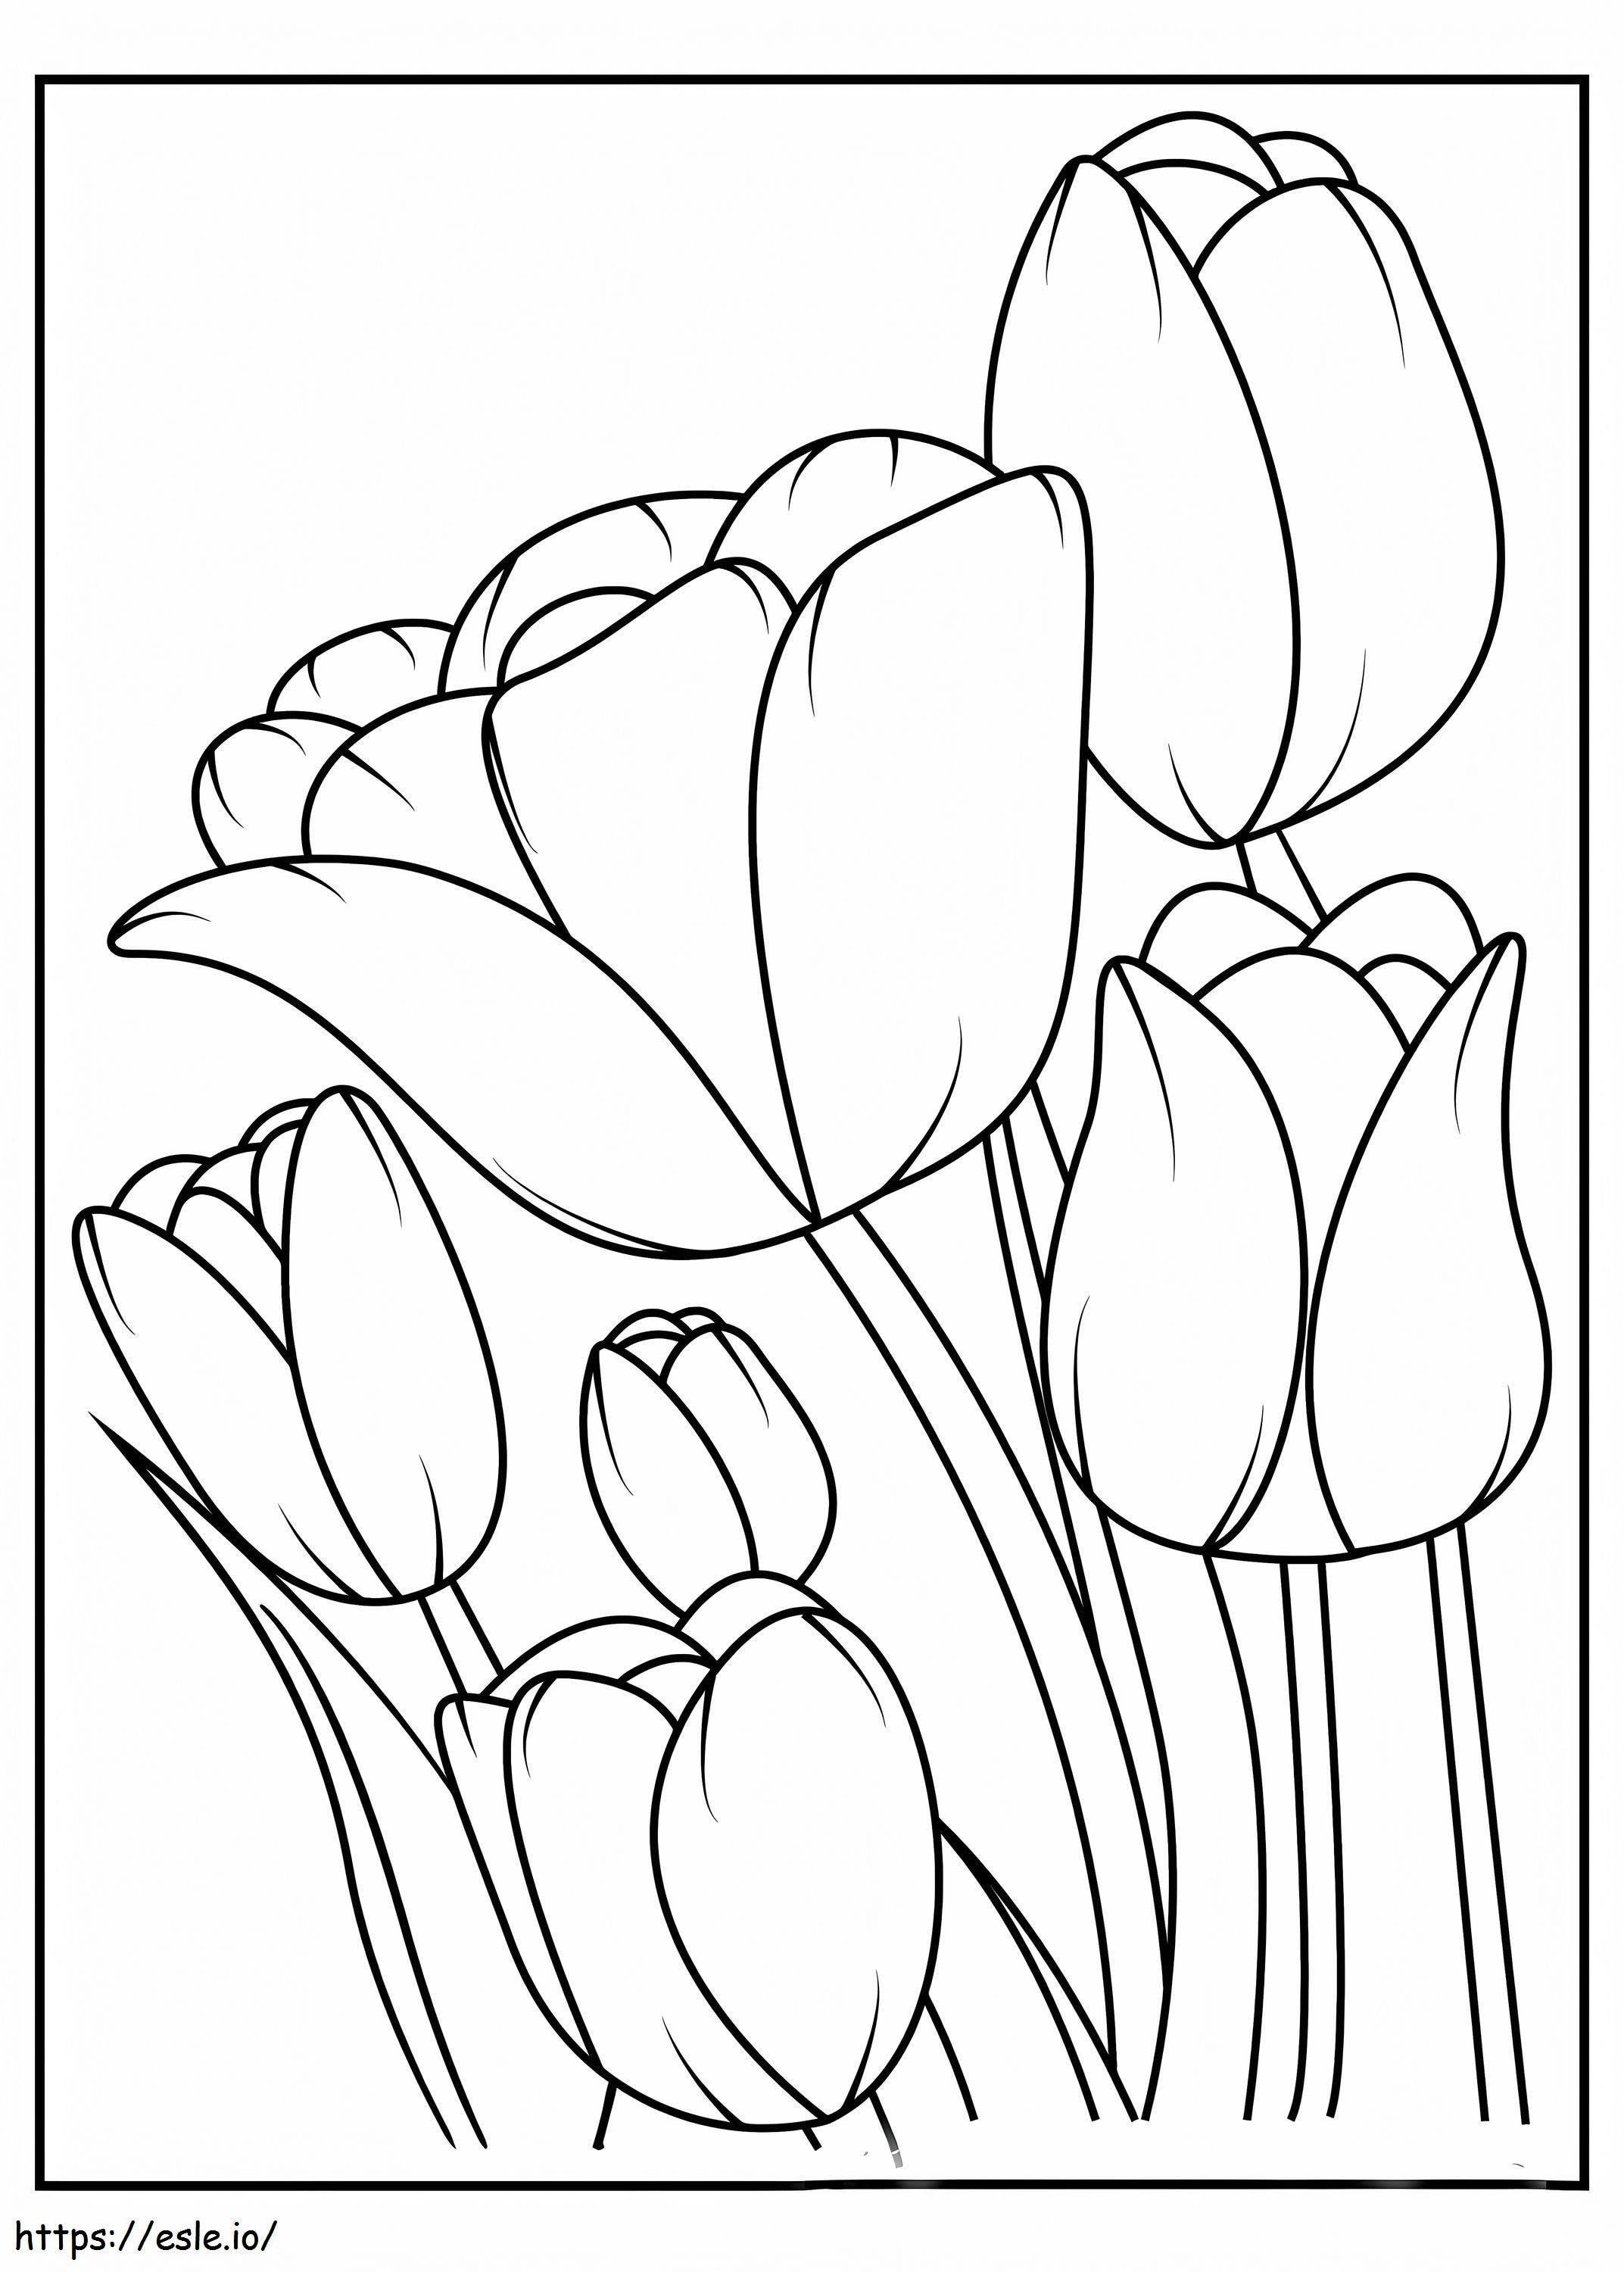 Coloriage Six tulipes à imprimer dessin